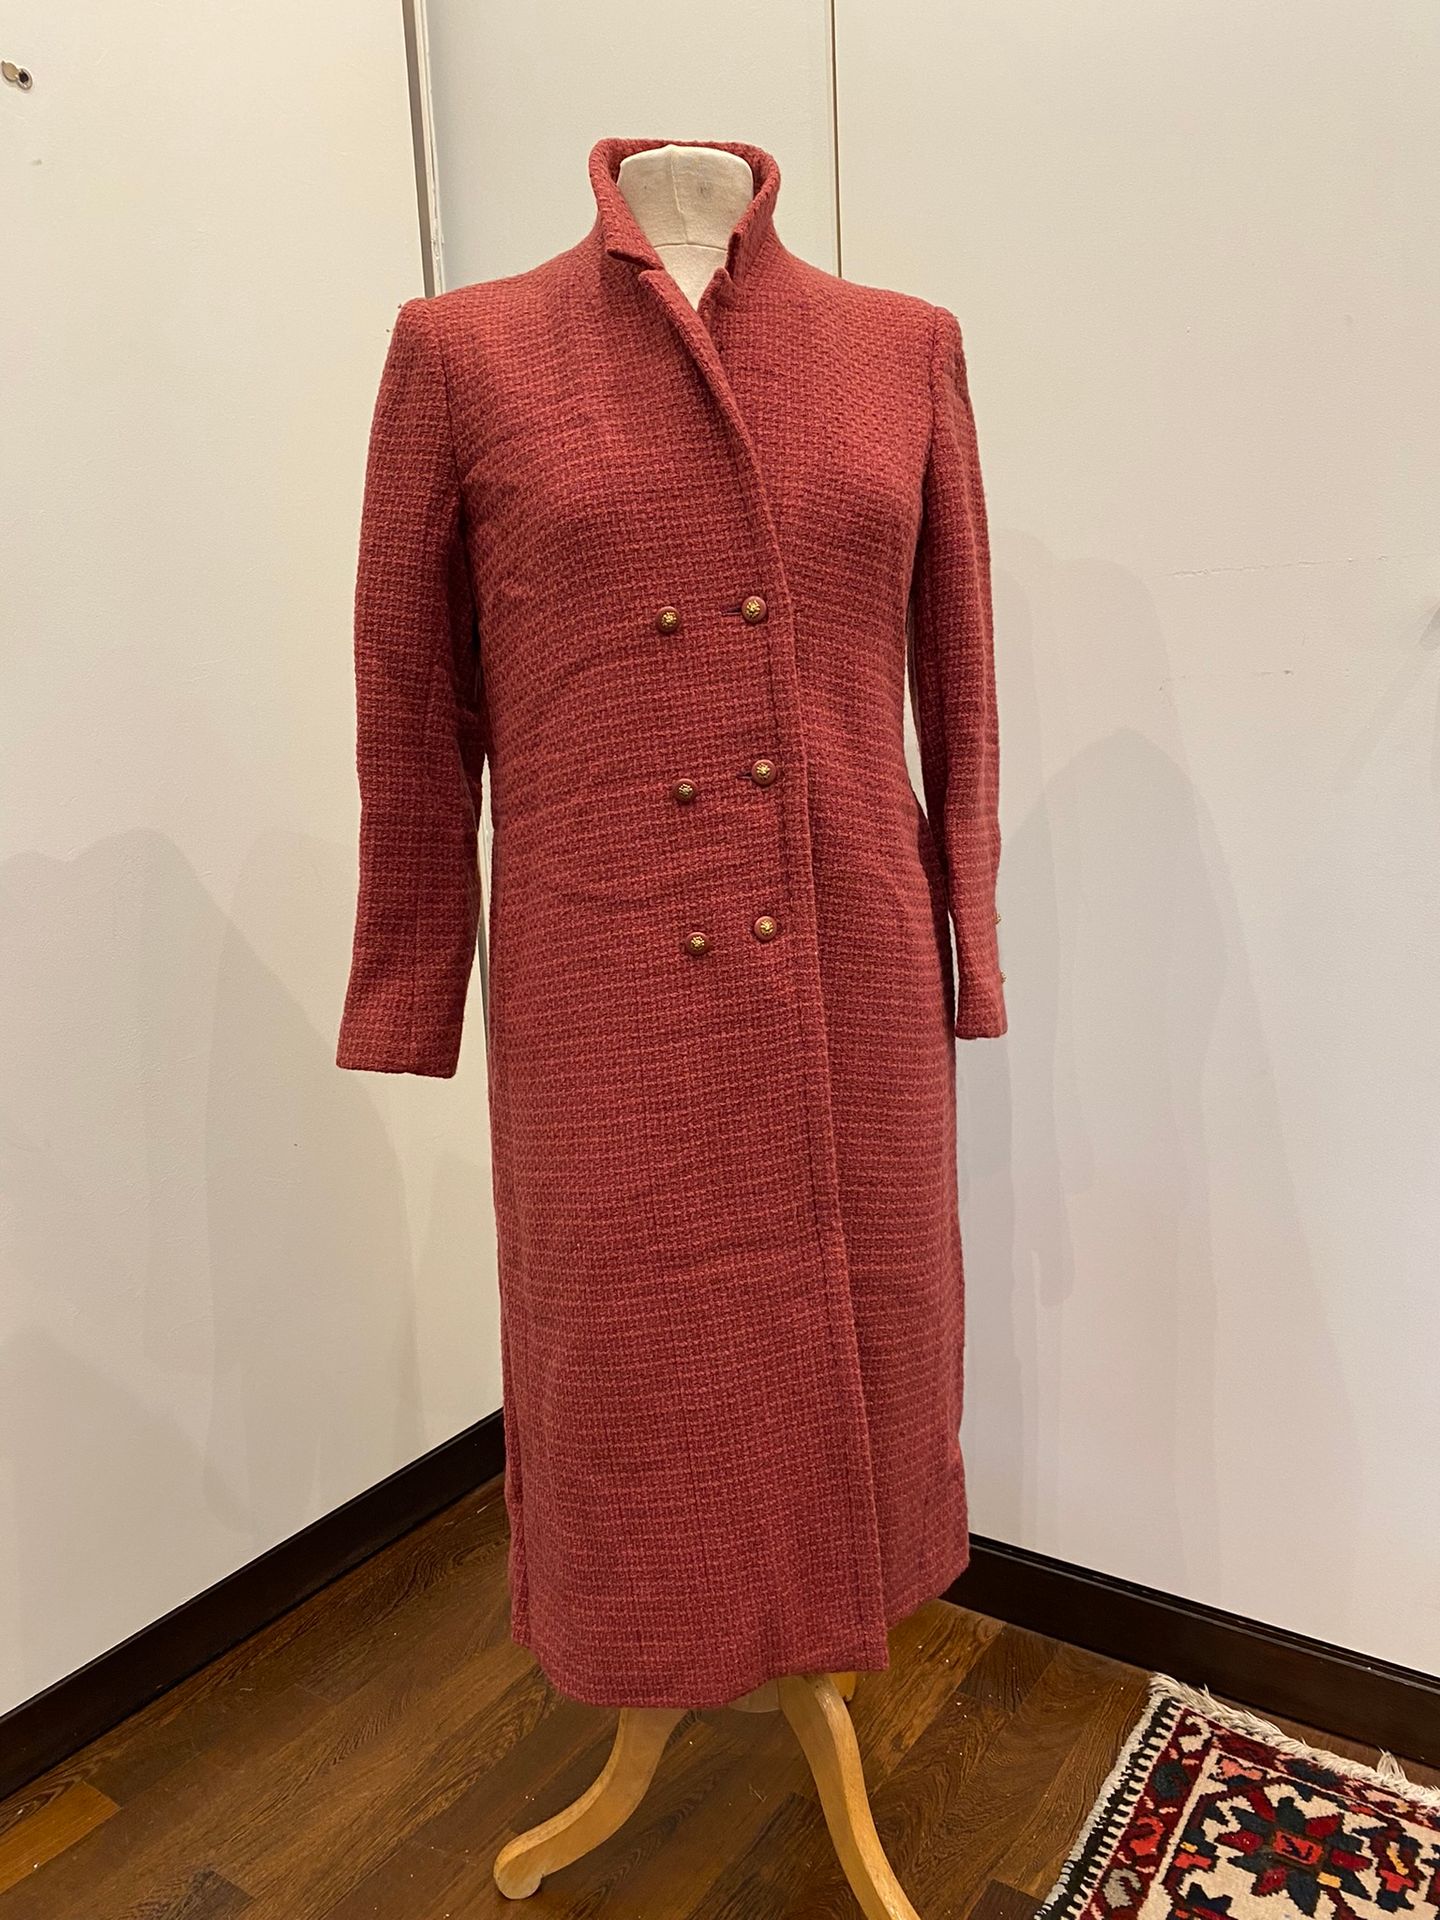 Null 
香奈儿创作





6号大衣和1条裙子





10码的羊毛裙